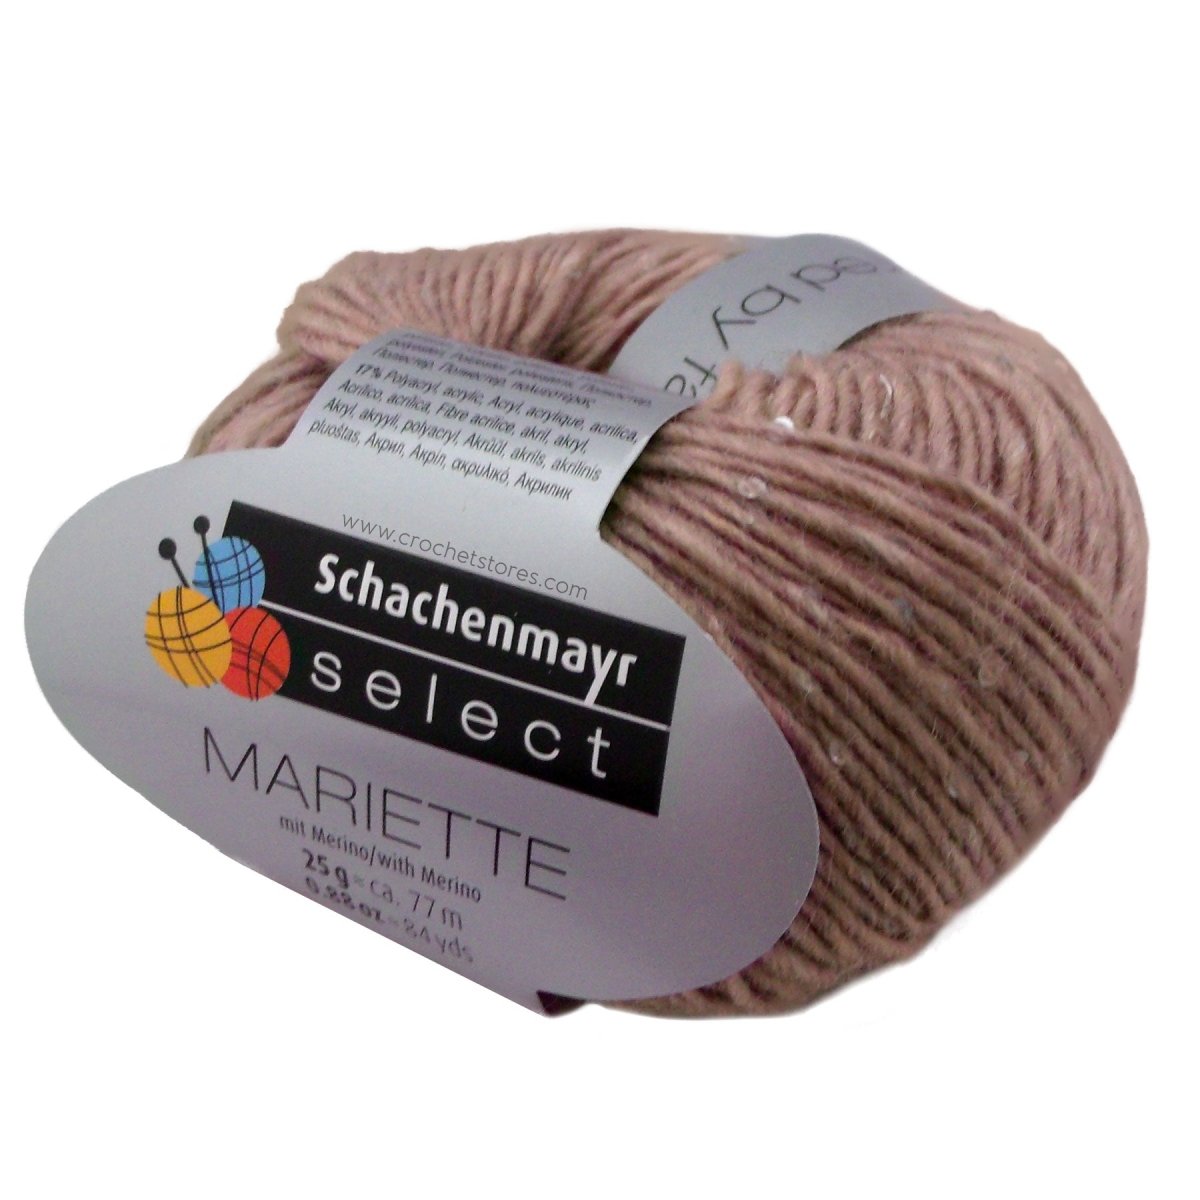 MARIETTE - Crochetstores9811781-81044053859050081